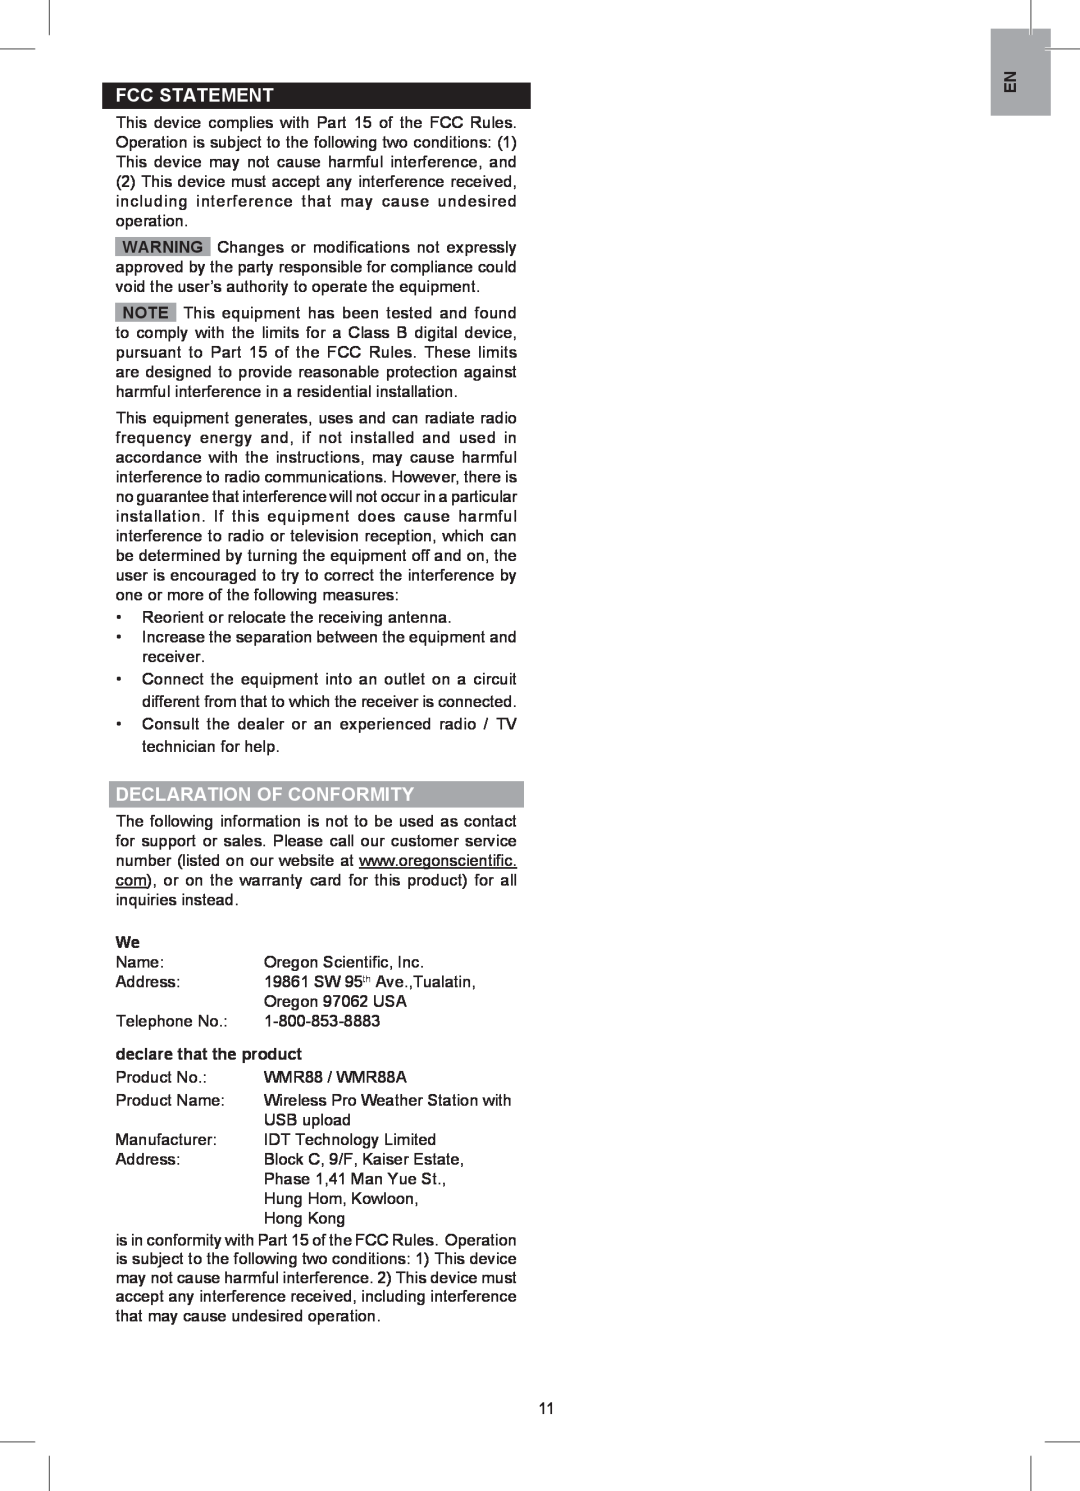 Oregon Scientific WMR88 user manual Fcc Statement, Declaration Of Conformity 